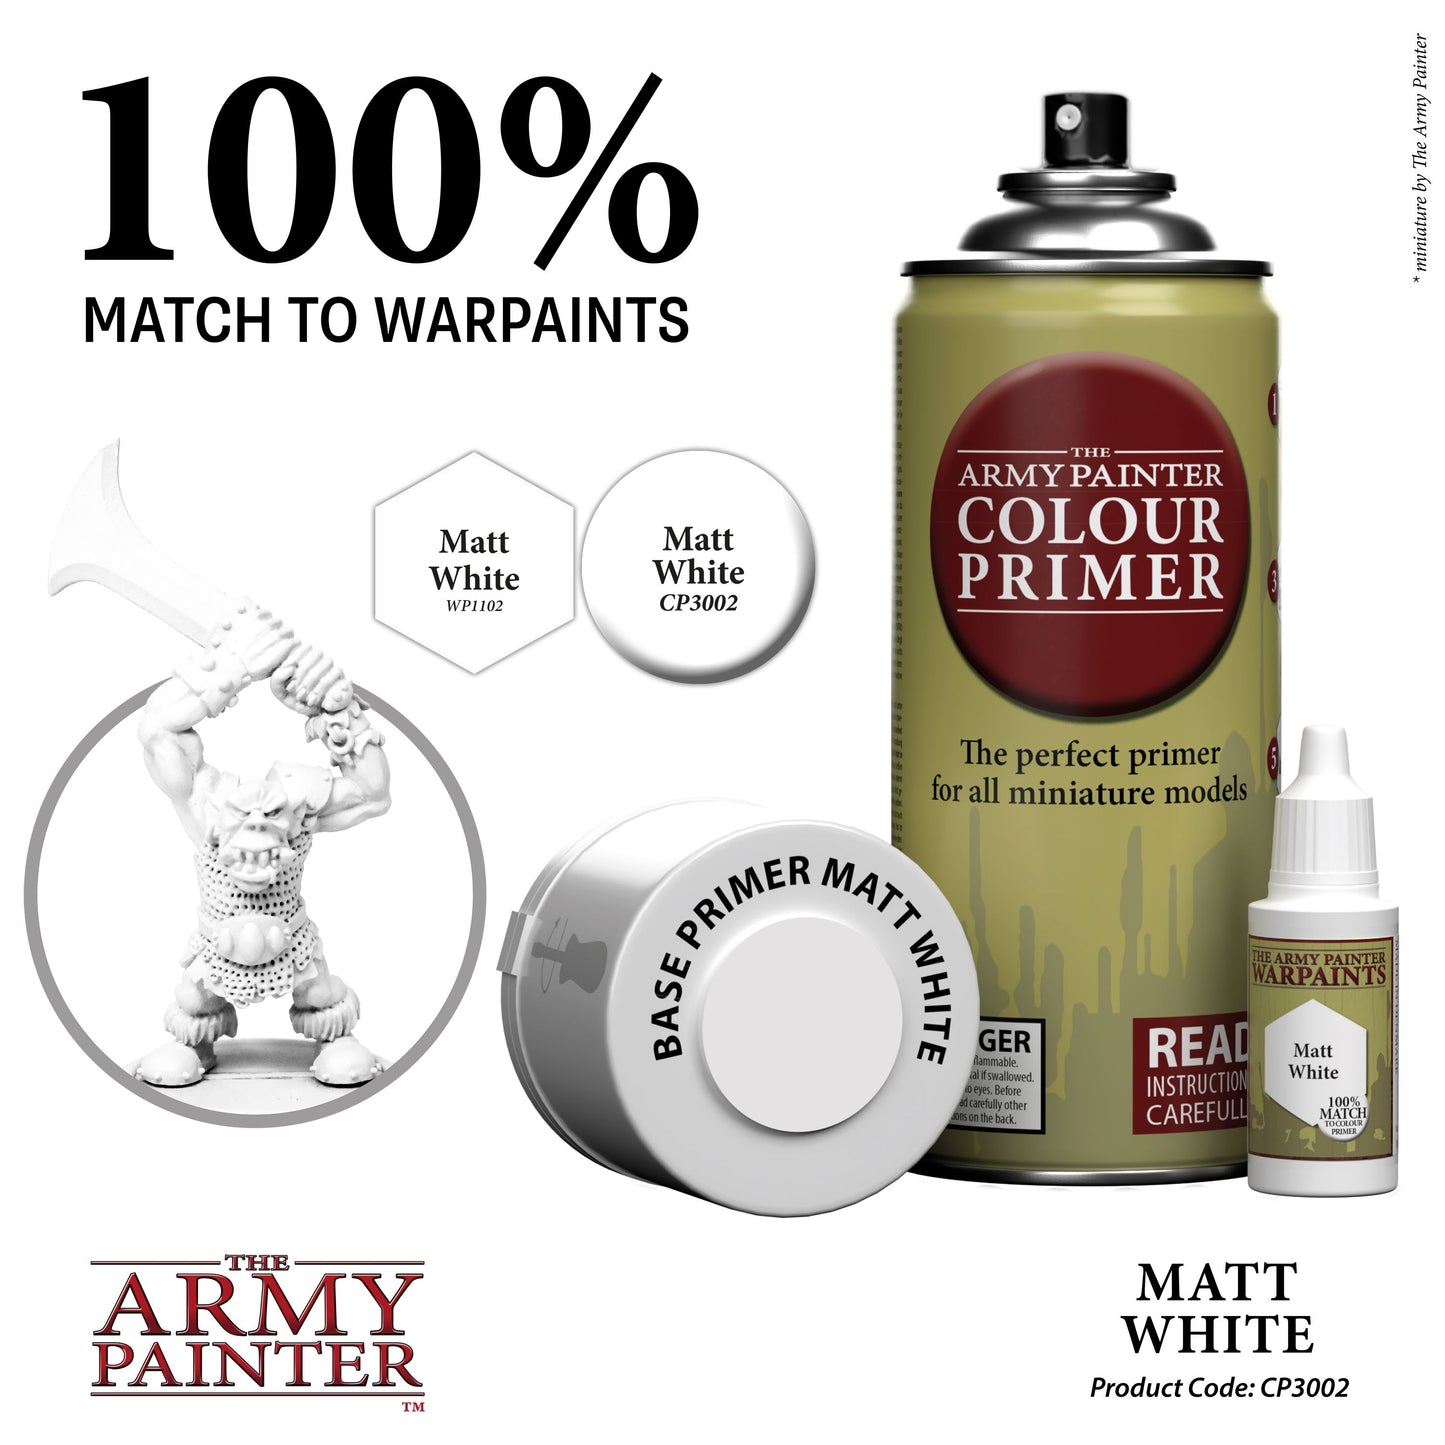 The Army Painter - Colour Primer: Matt White